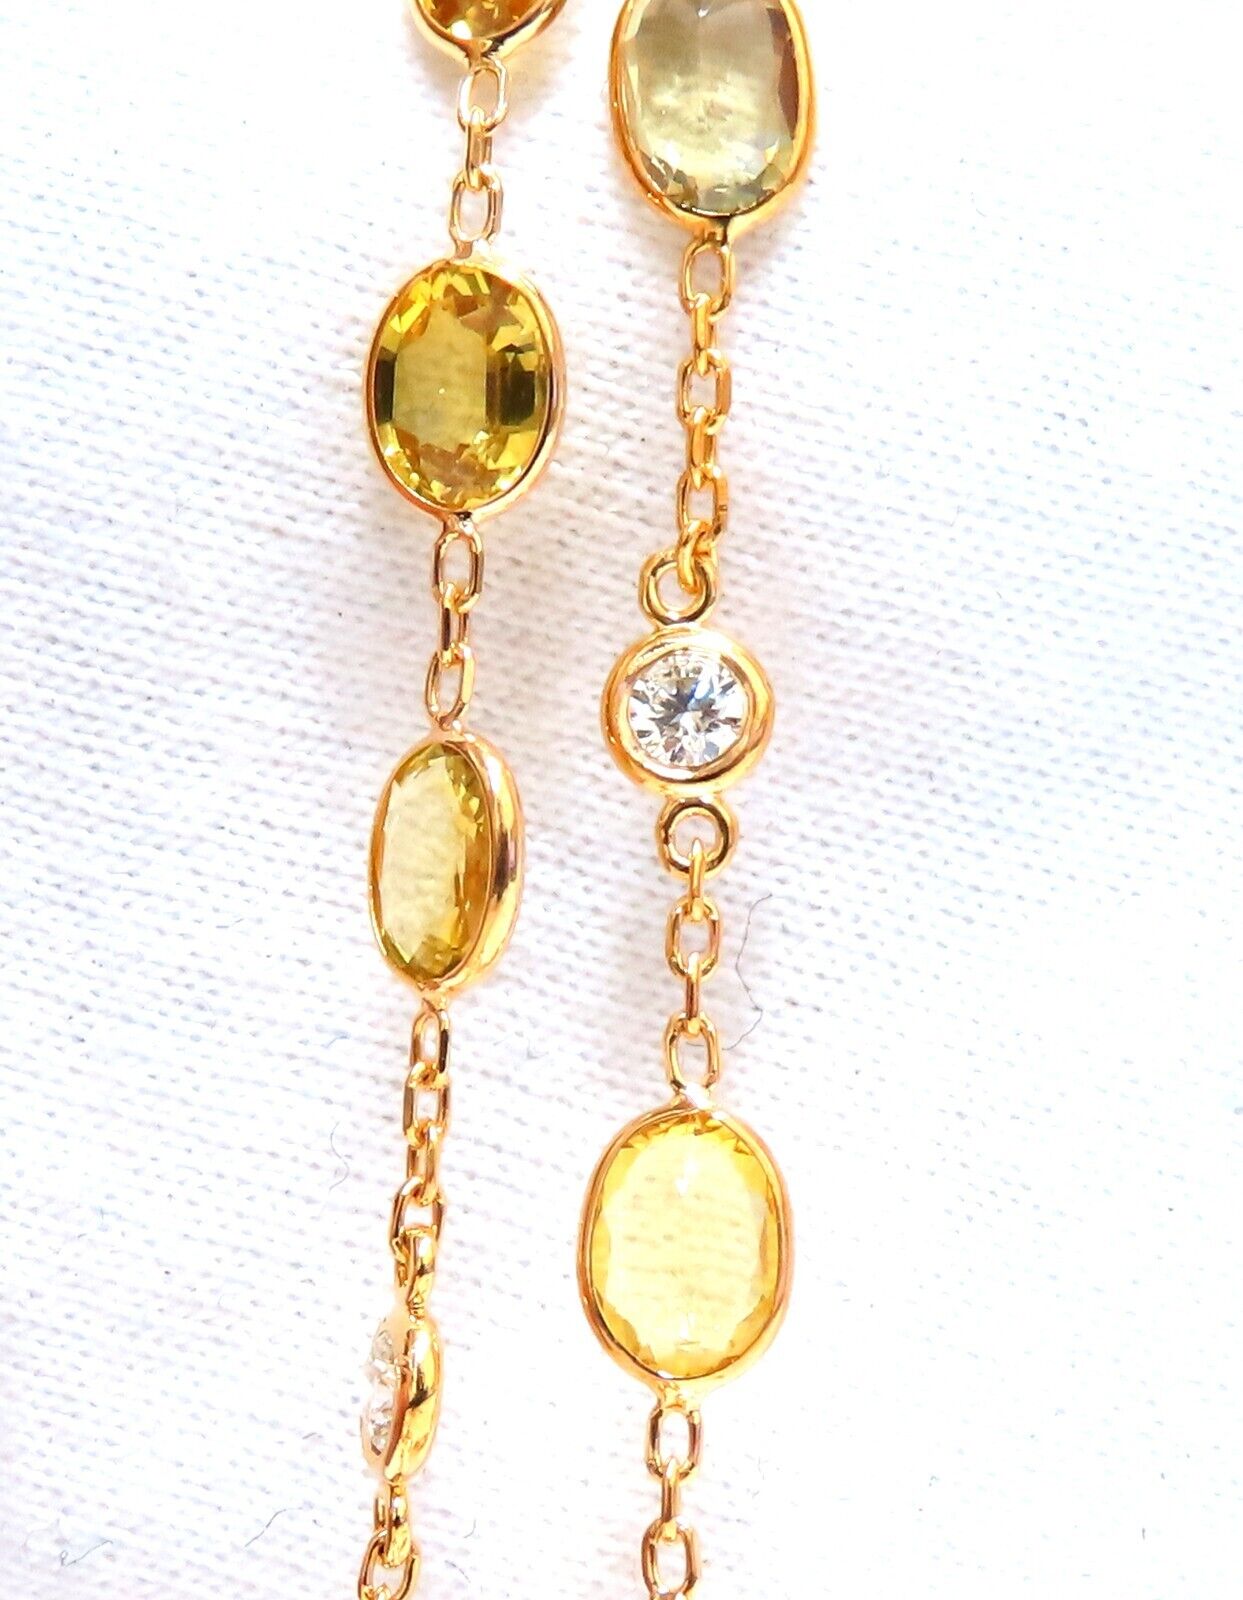 27ct fancy vivid yellow Sapphire diamonds station yard necklace 14 karat